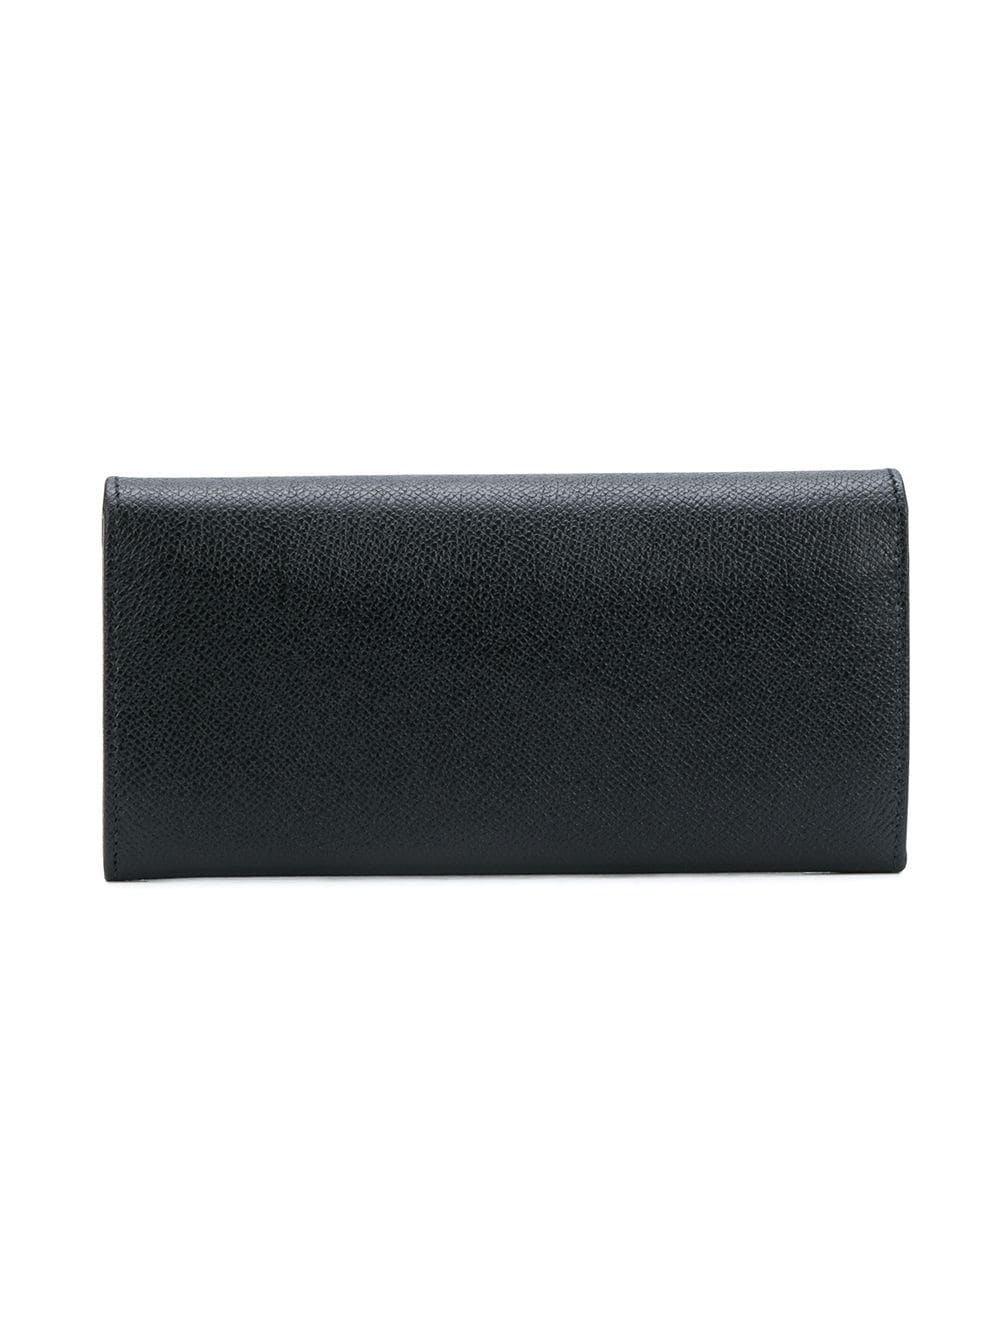 Image 2 of Ferragamo Gancini flip-lock leather purse